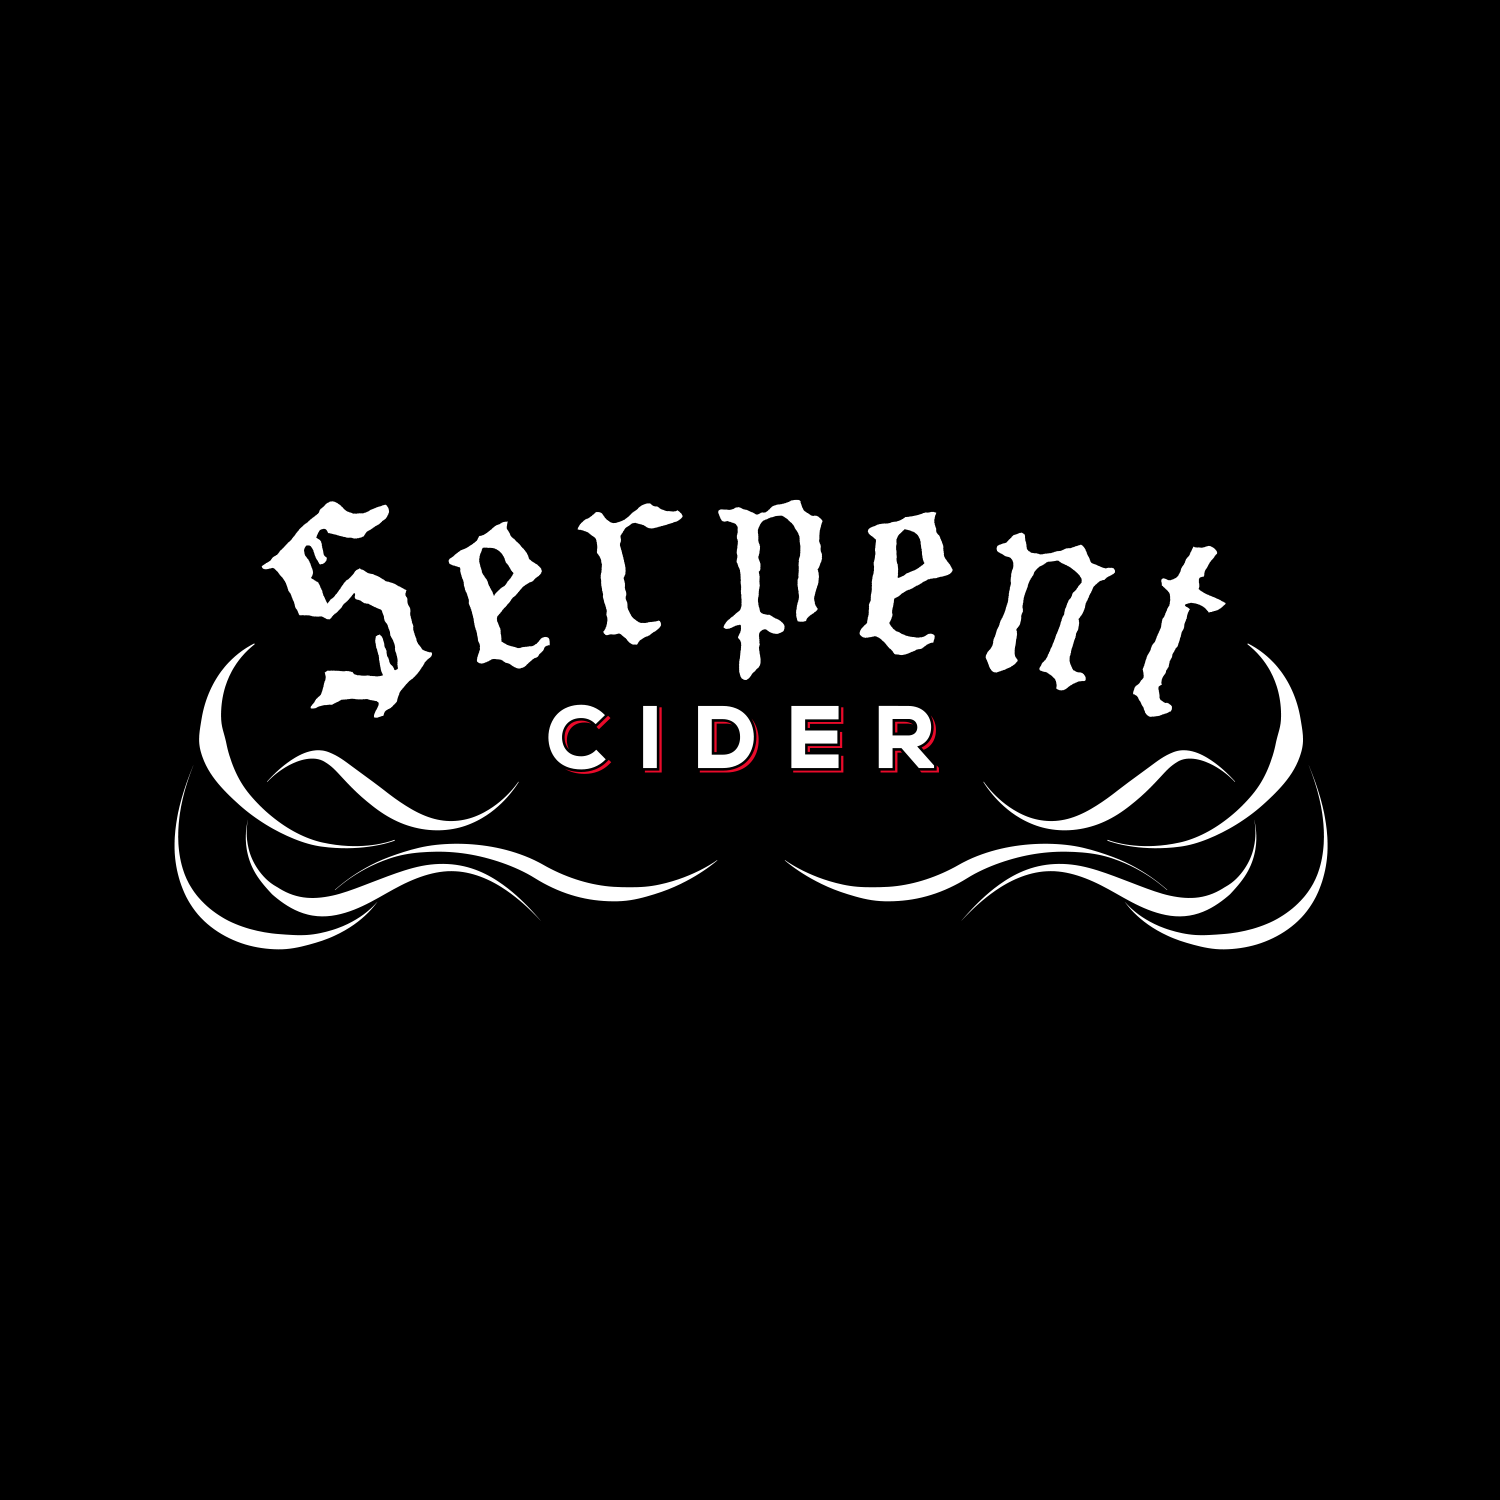 Serpent Cider logo